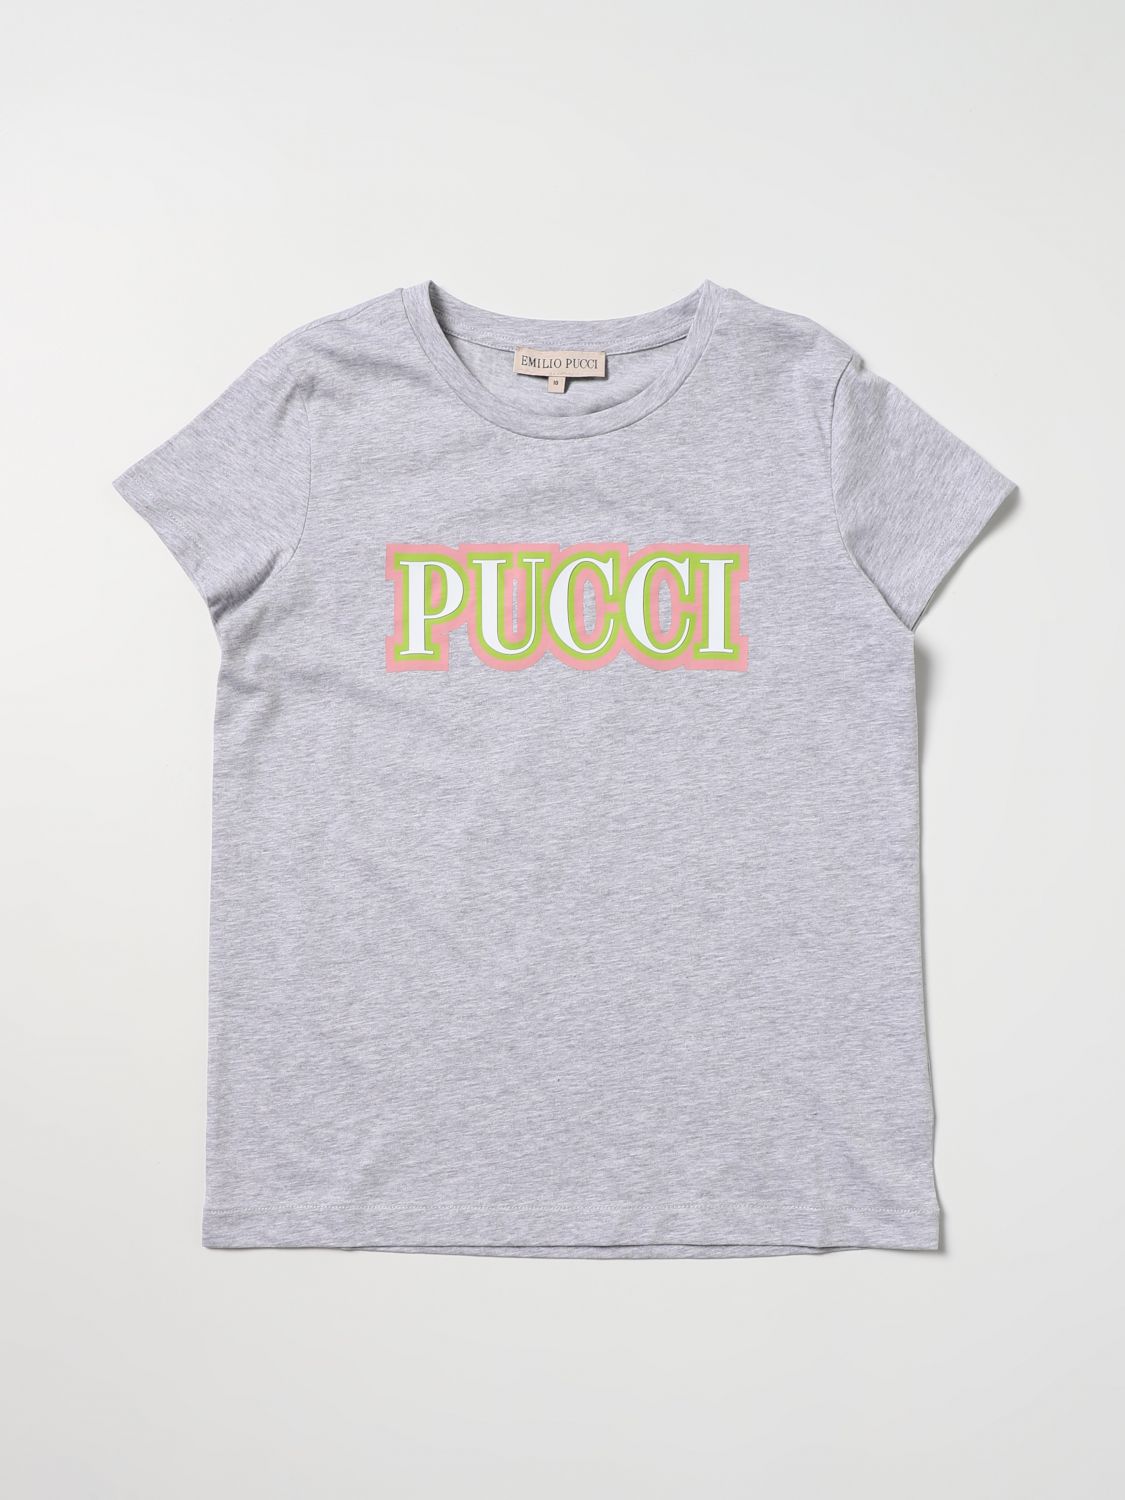 Emilio Pucci Emilio Pucci t-shirt with logo print